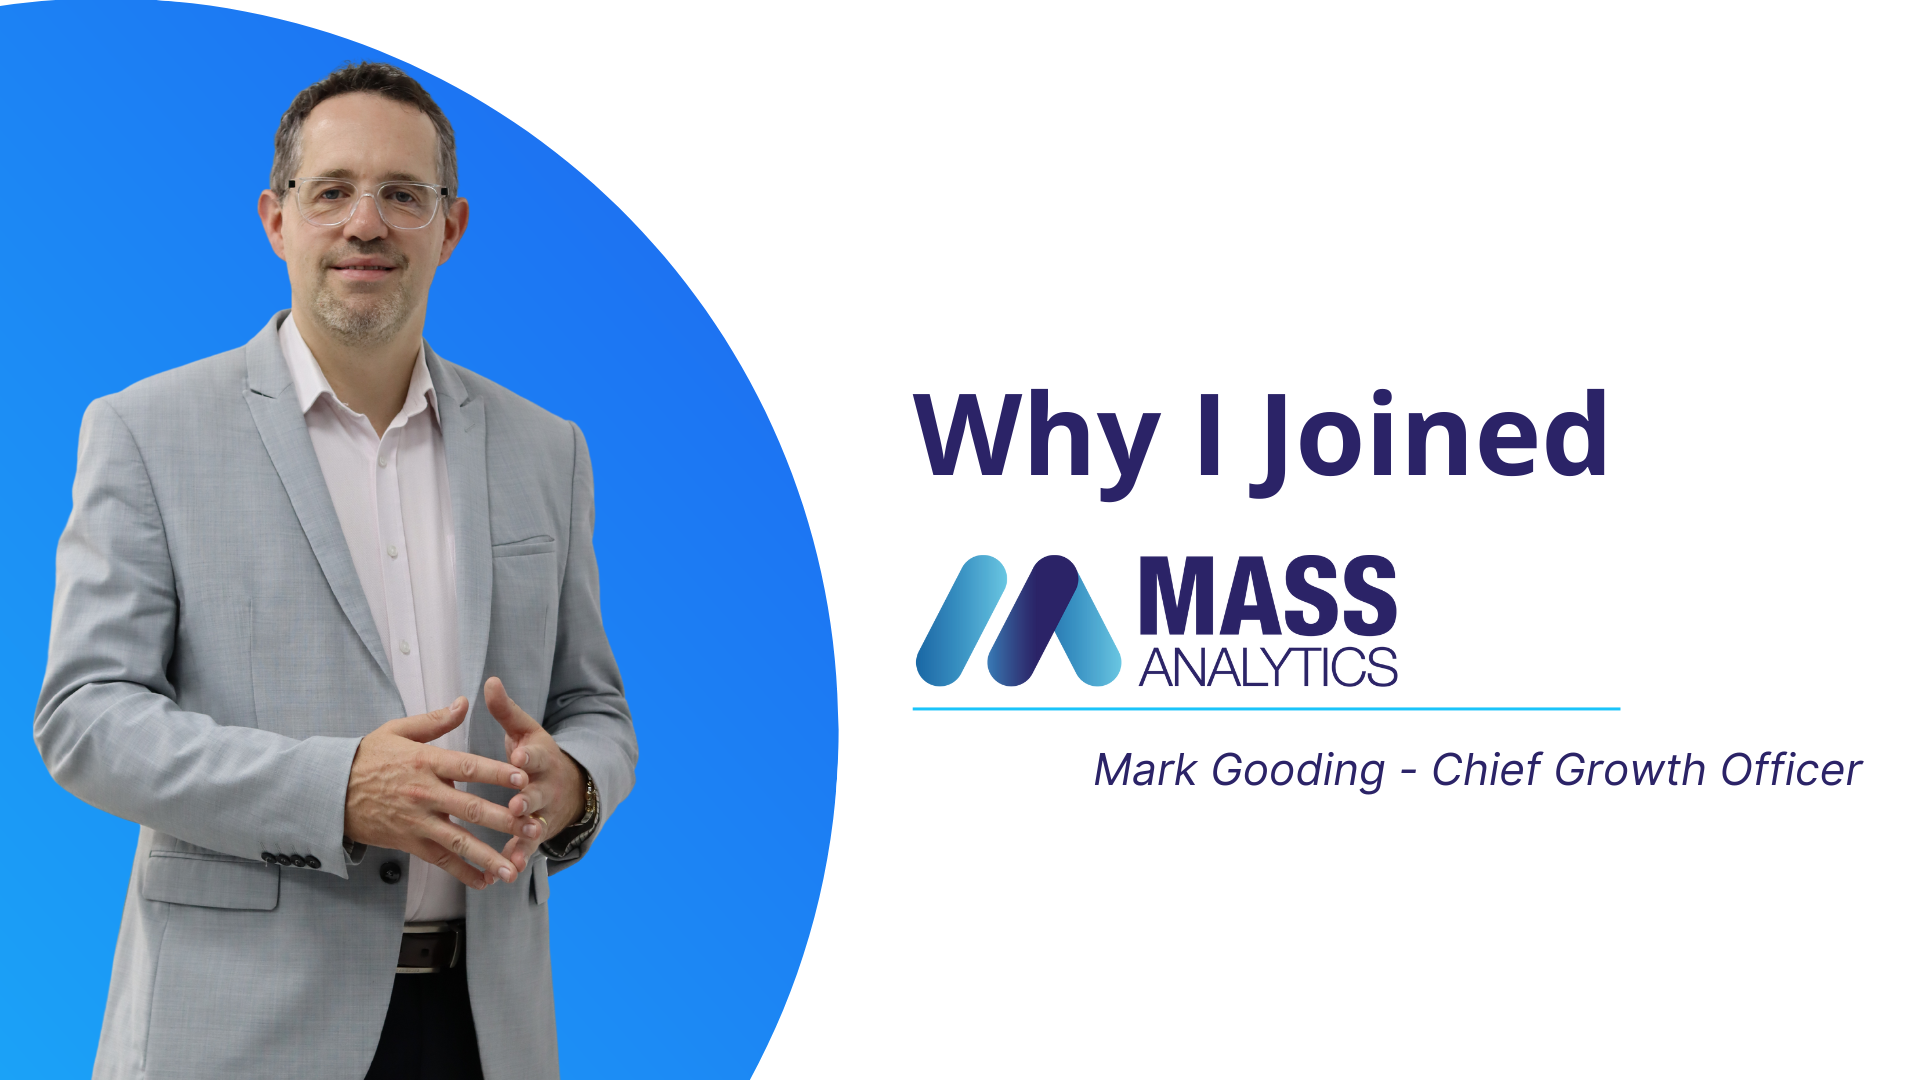 “Why I joined MASS Analytics” Mark Gooding